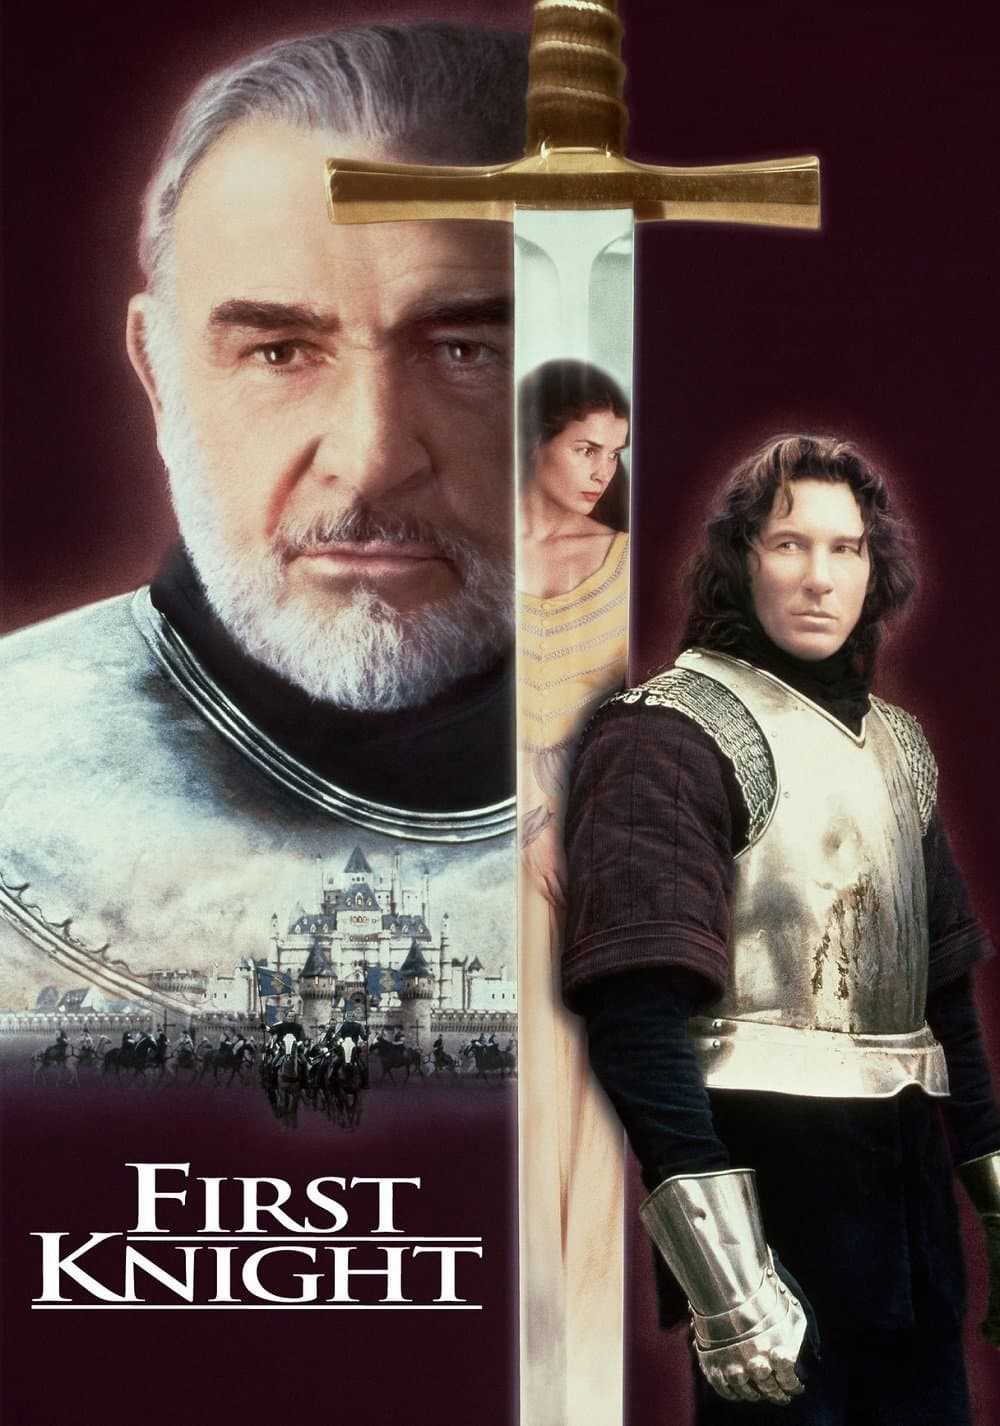 First knight - First knight